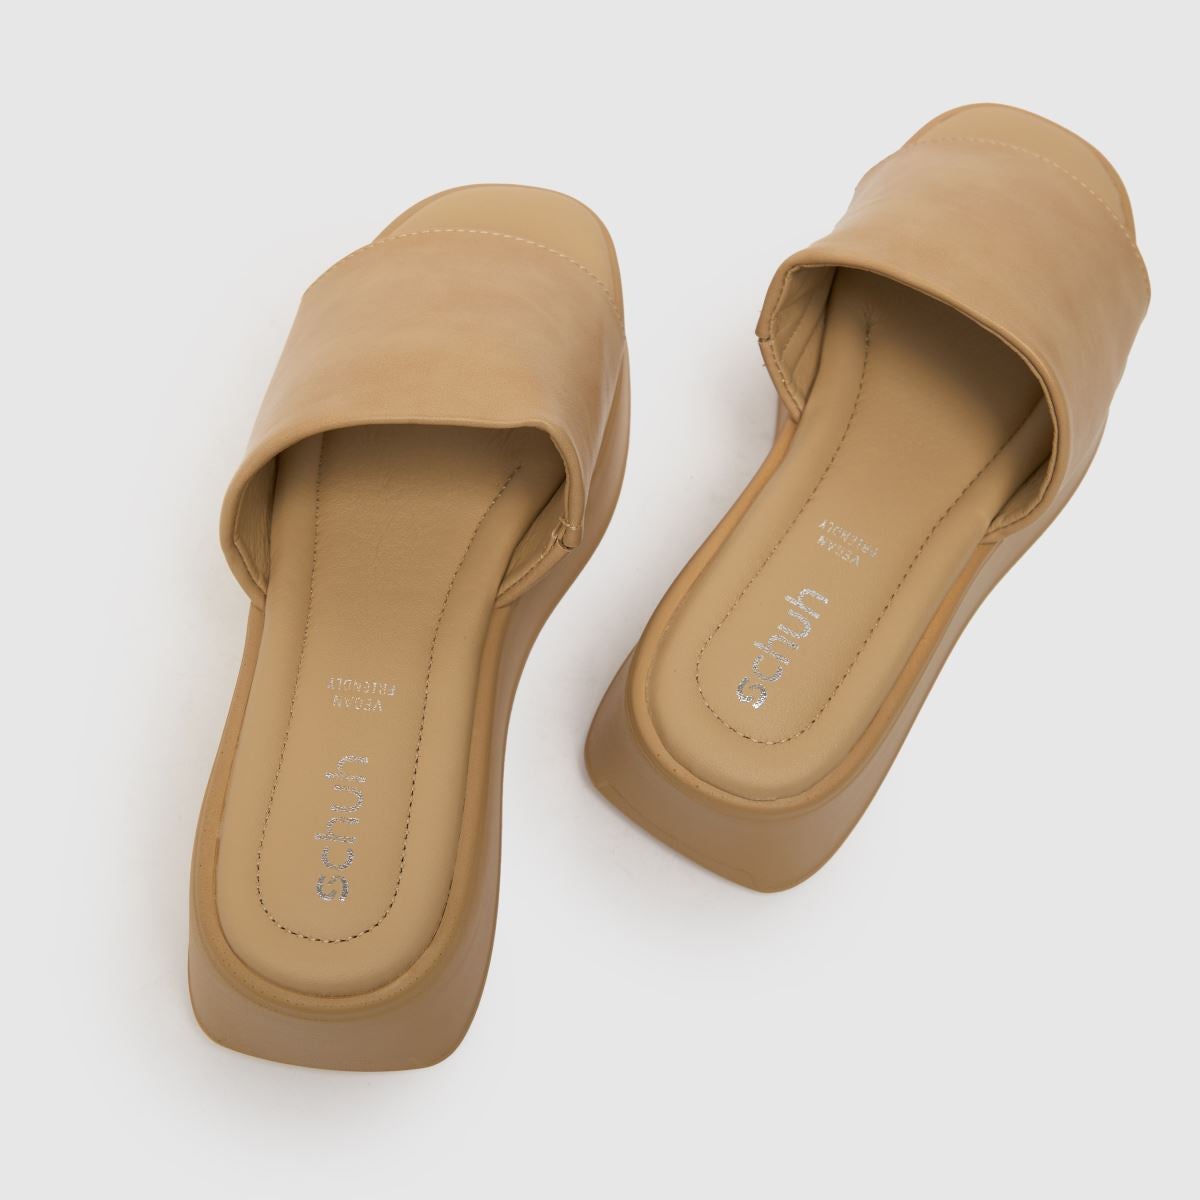 Schuh + Tatiana Chunky Mule Sandals